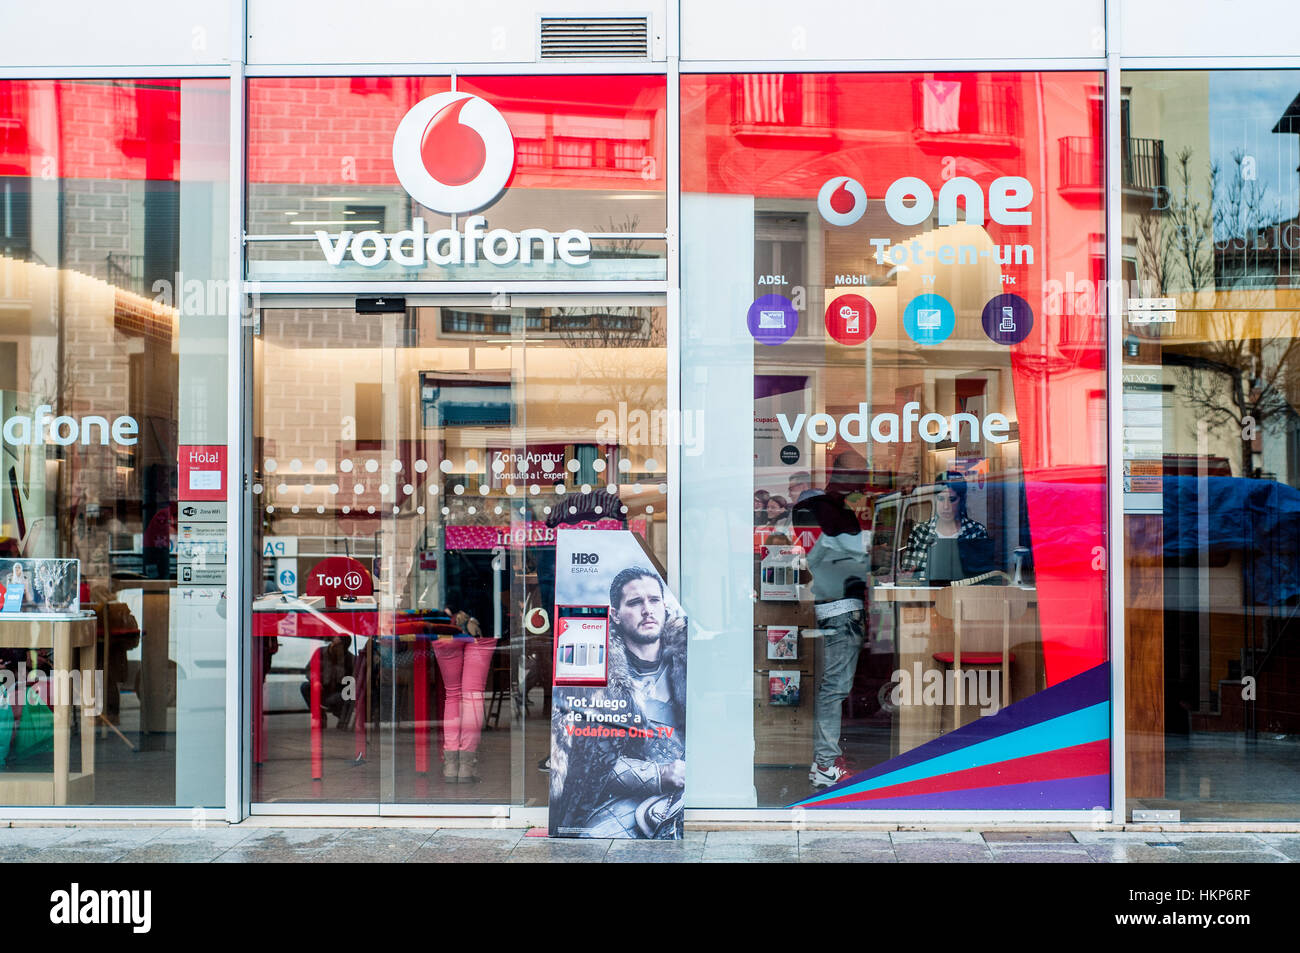 Vodafone shop front, Vic, Barcelona, catalonia, Spain Stock Photo